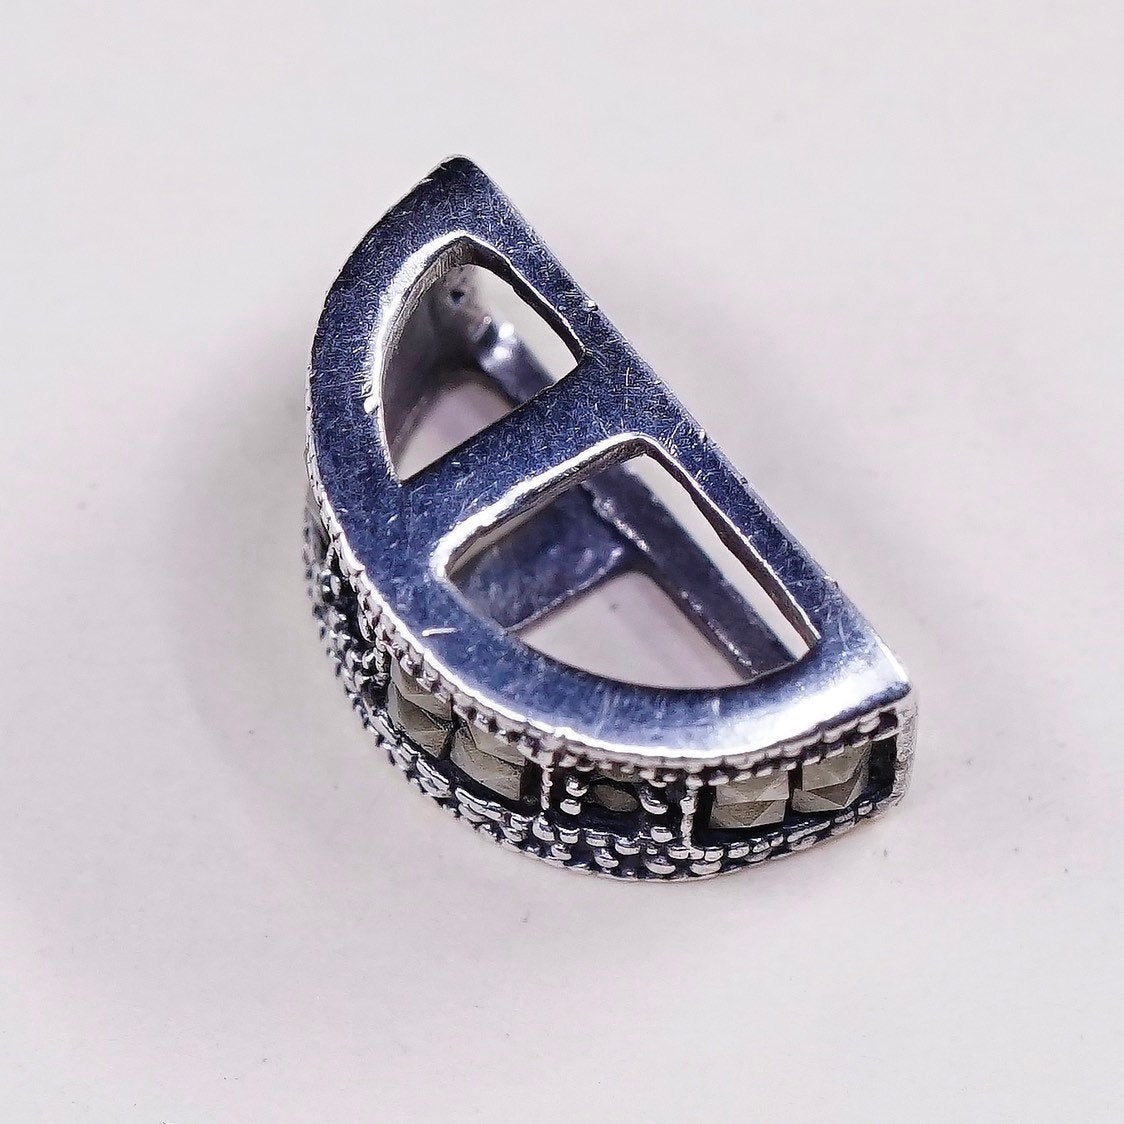 VTG sterling silver handmade pendant, 925 silver with marcasite pendant